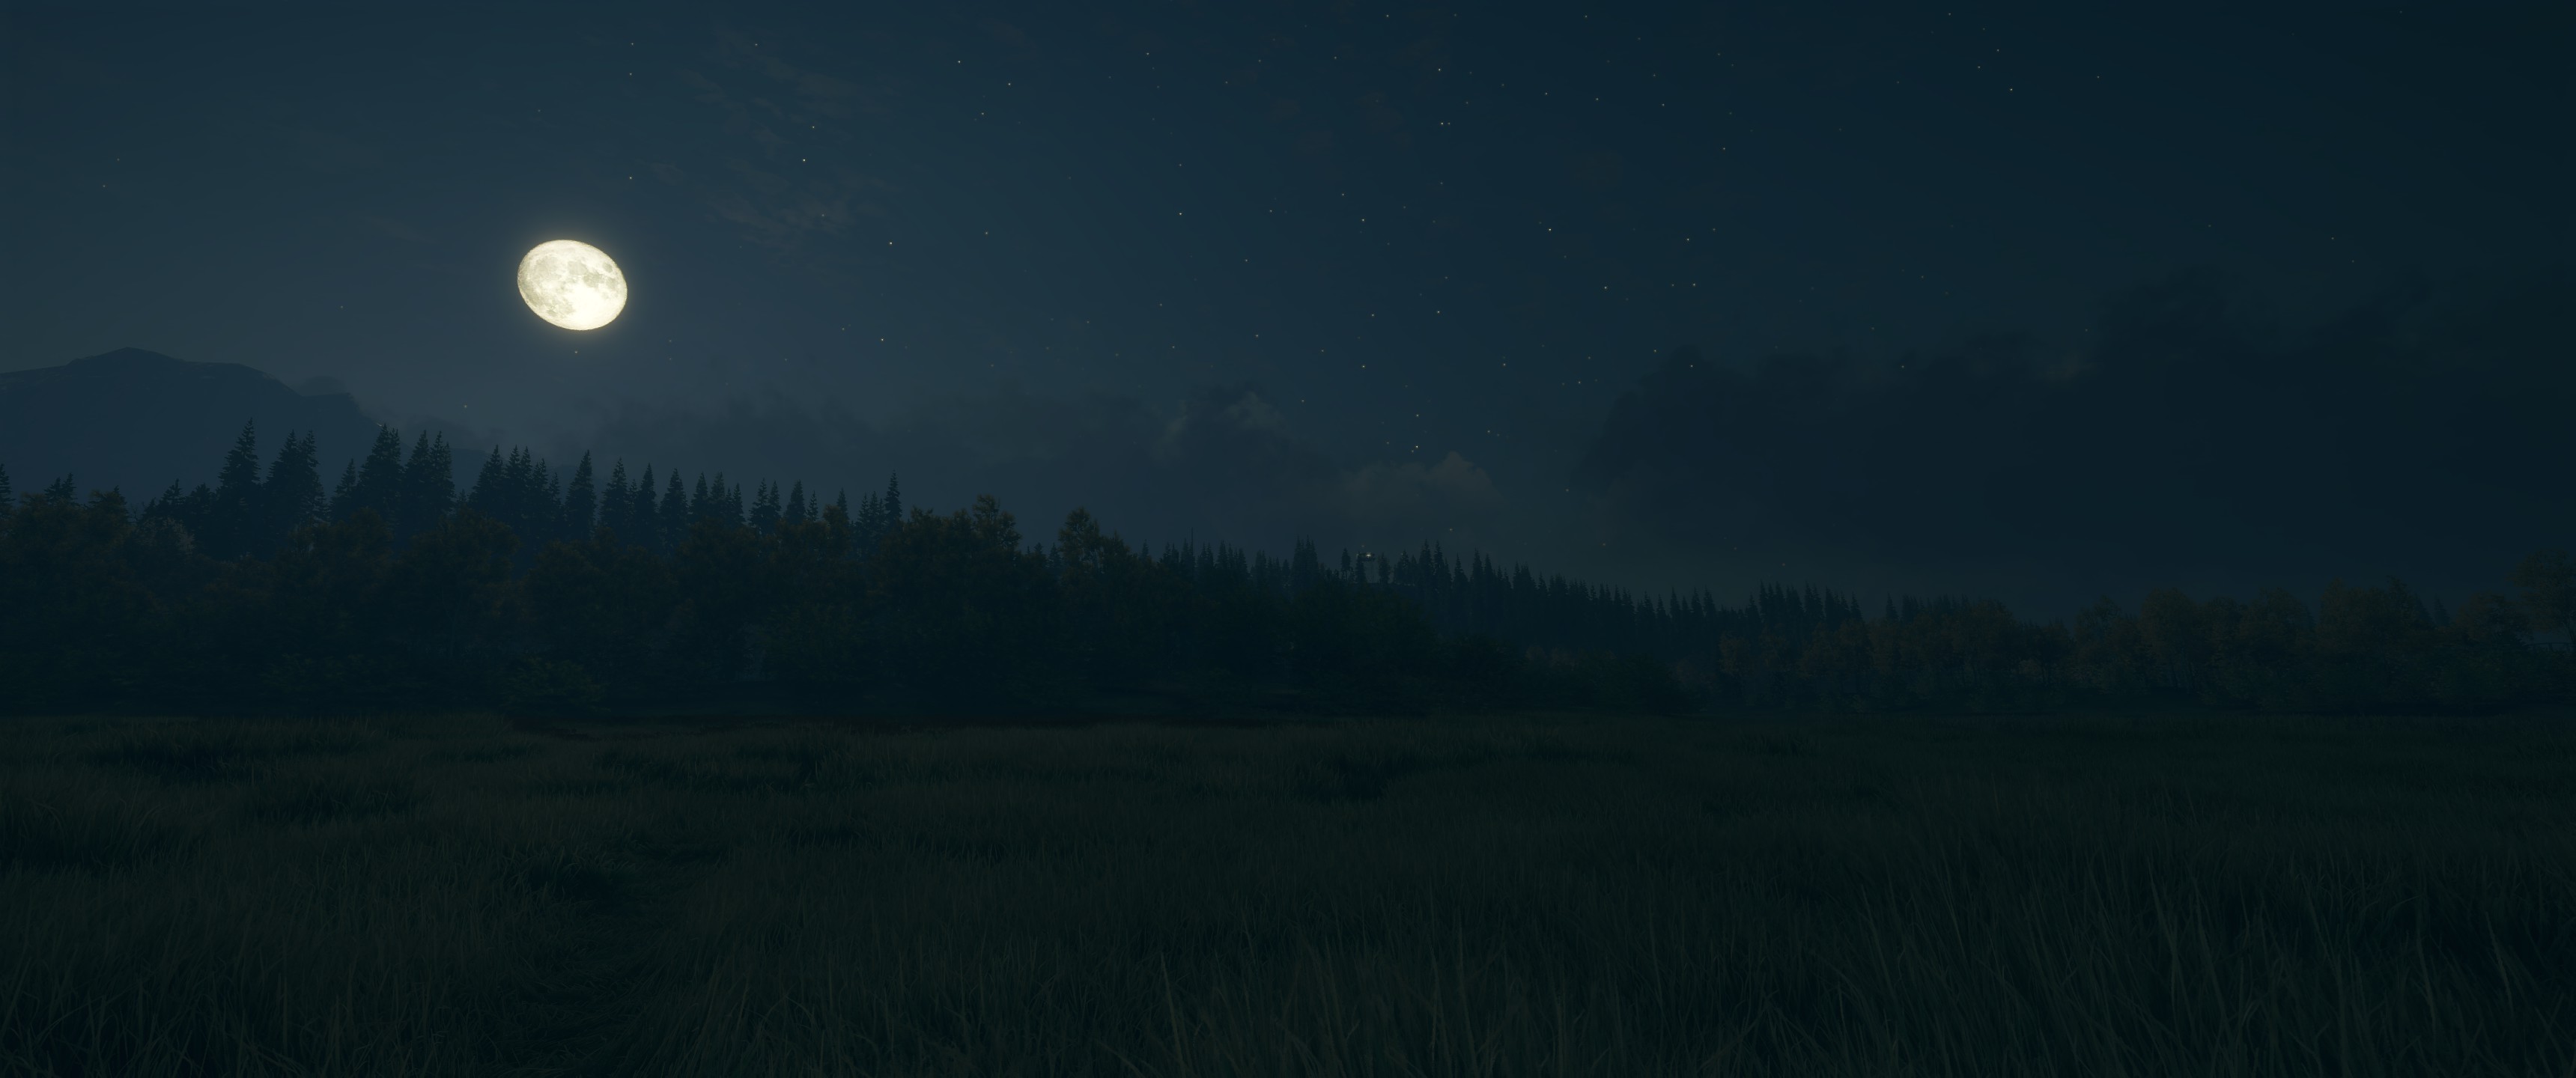 General 3440x1440 landscape ultrawide dark simple background trees minimalism night Moon sky grass